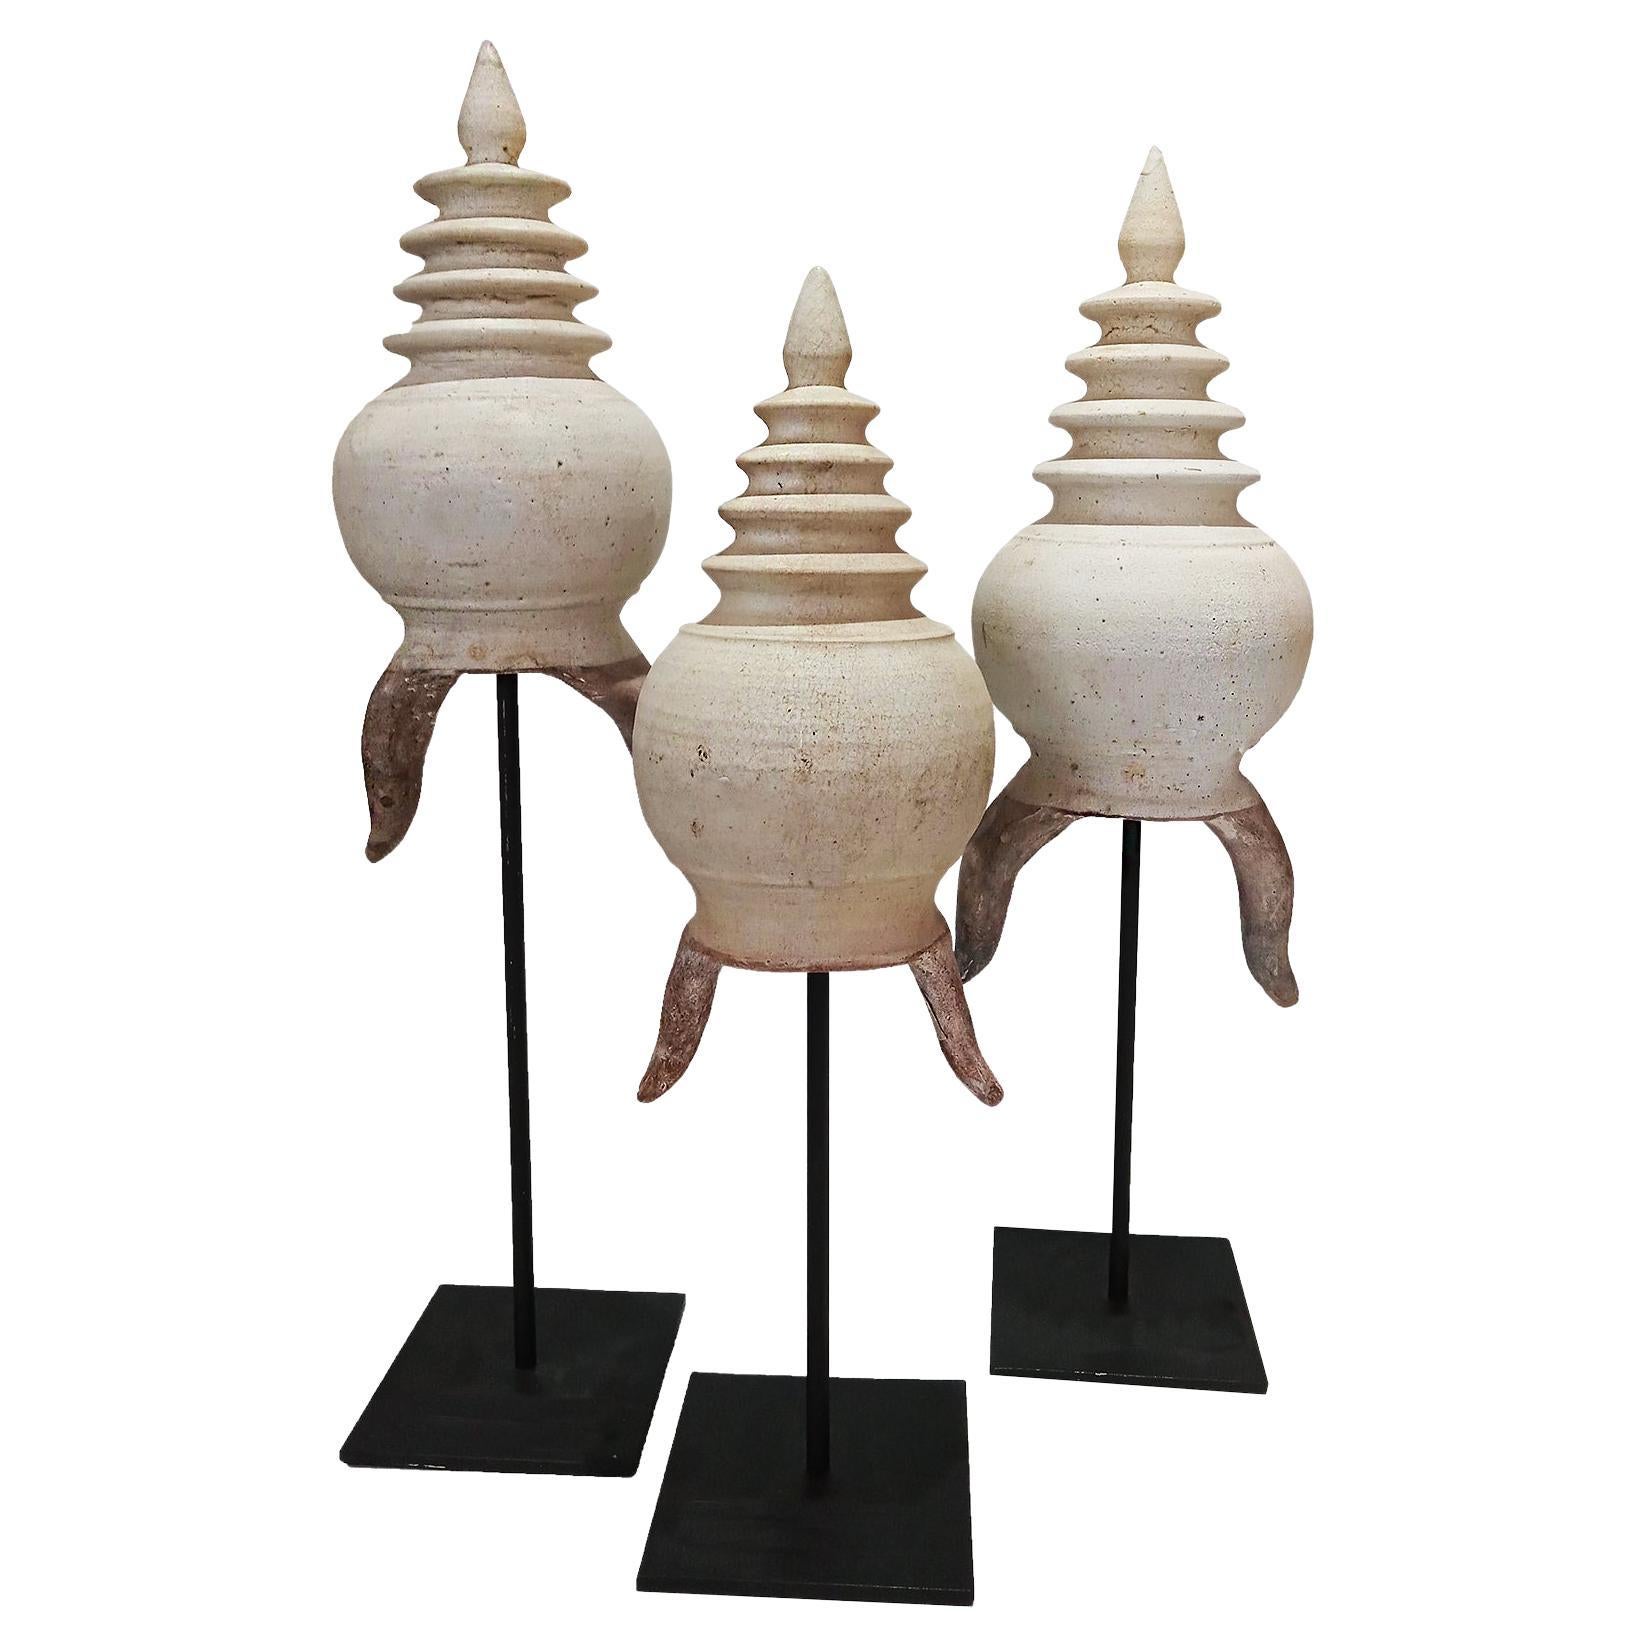 Thai Ceramic Stupa, on Stand